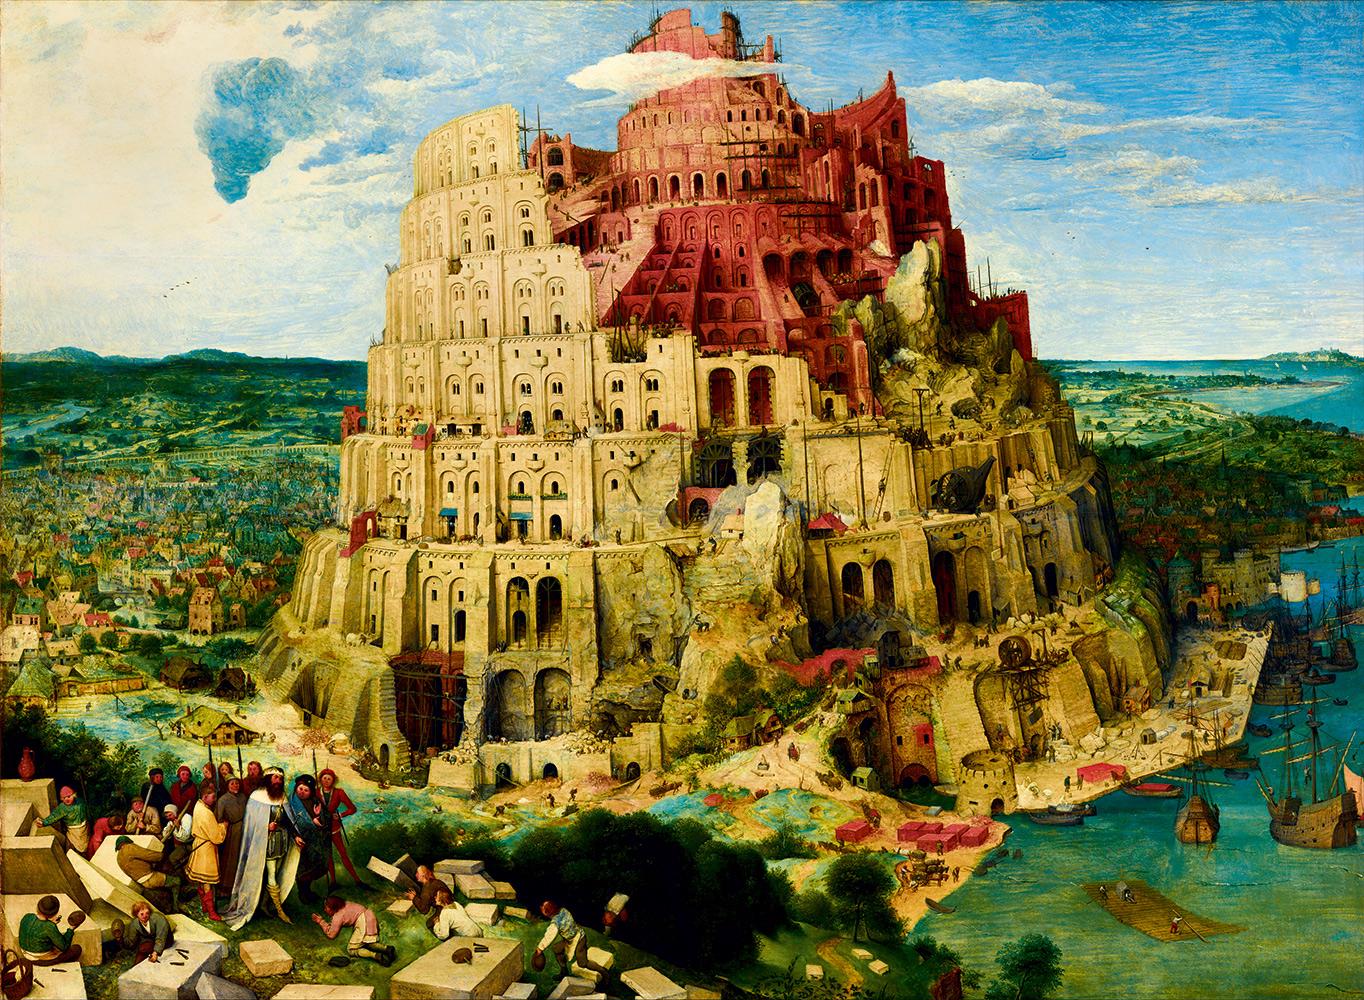 Puzzle Brueghel: Babelstårnet, 1563